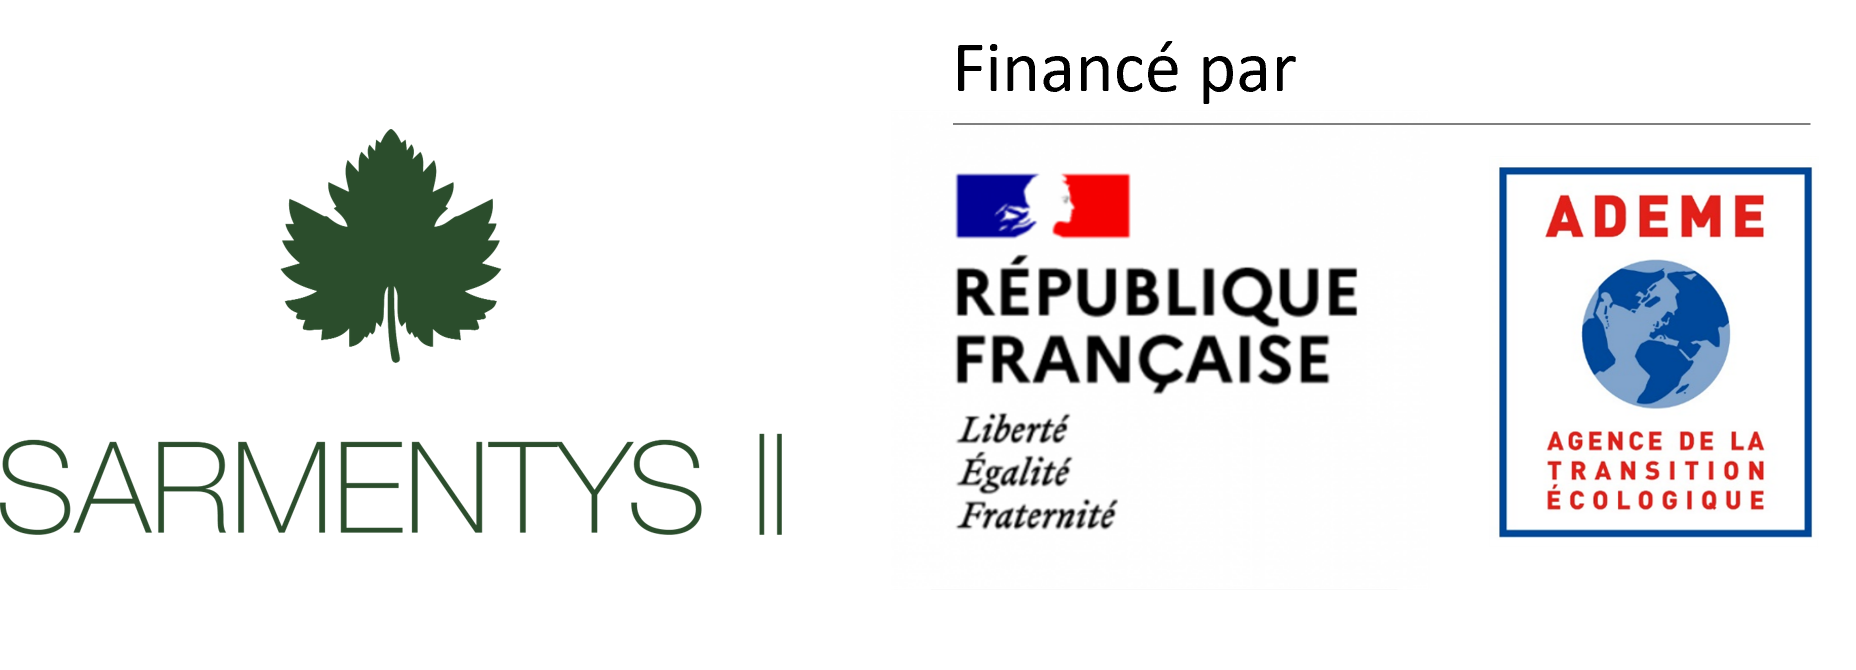 bandeau_financeurs_logo